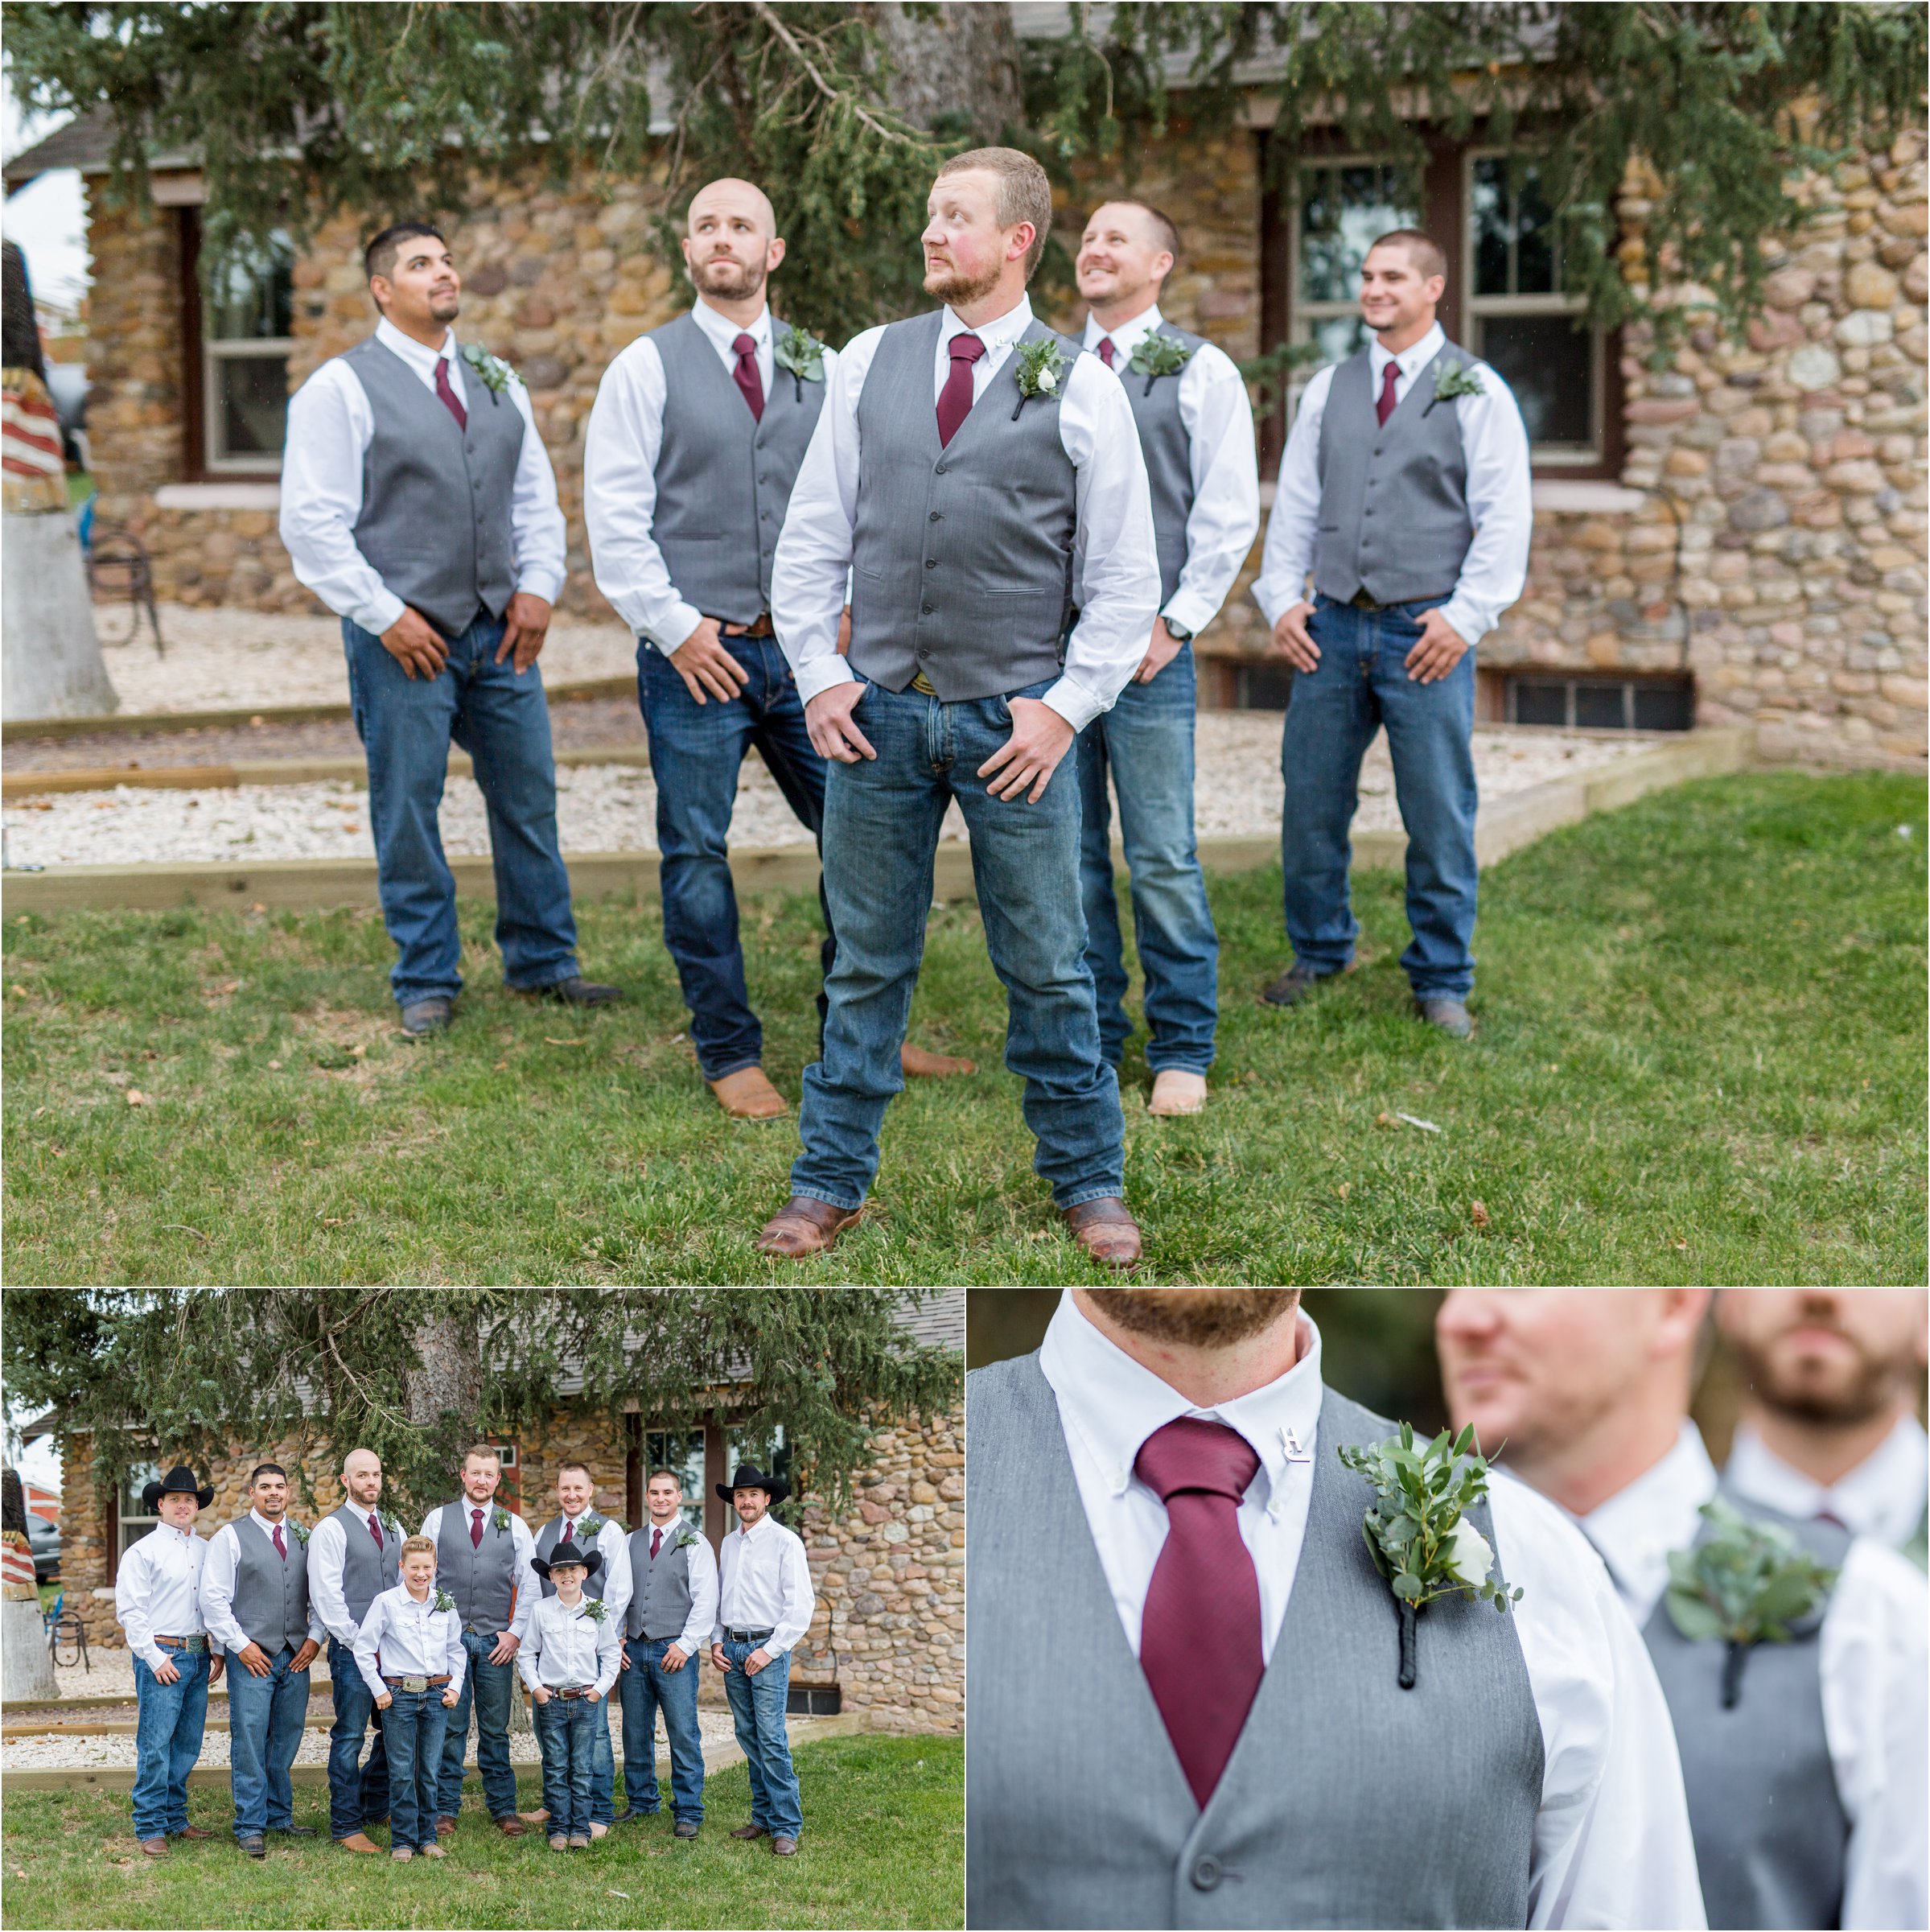 Cheyenne, Wyoming Country Wedding by Greeley, Colorado Wedding Photographer